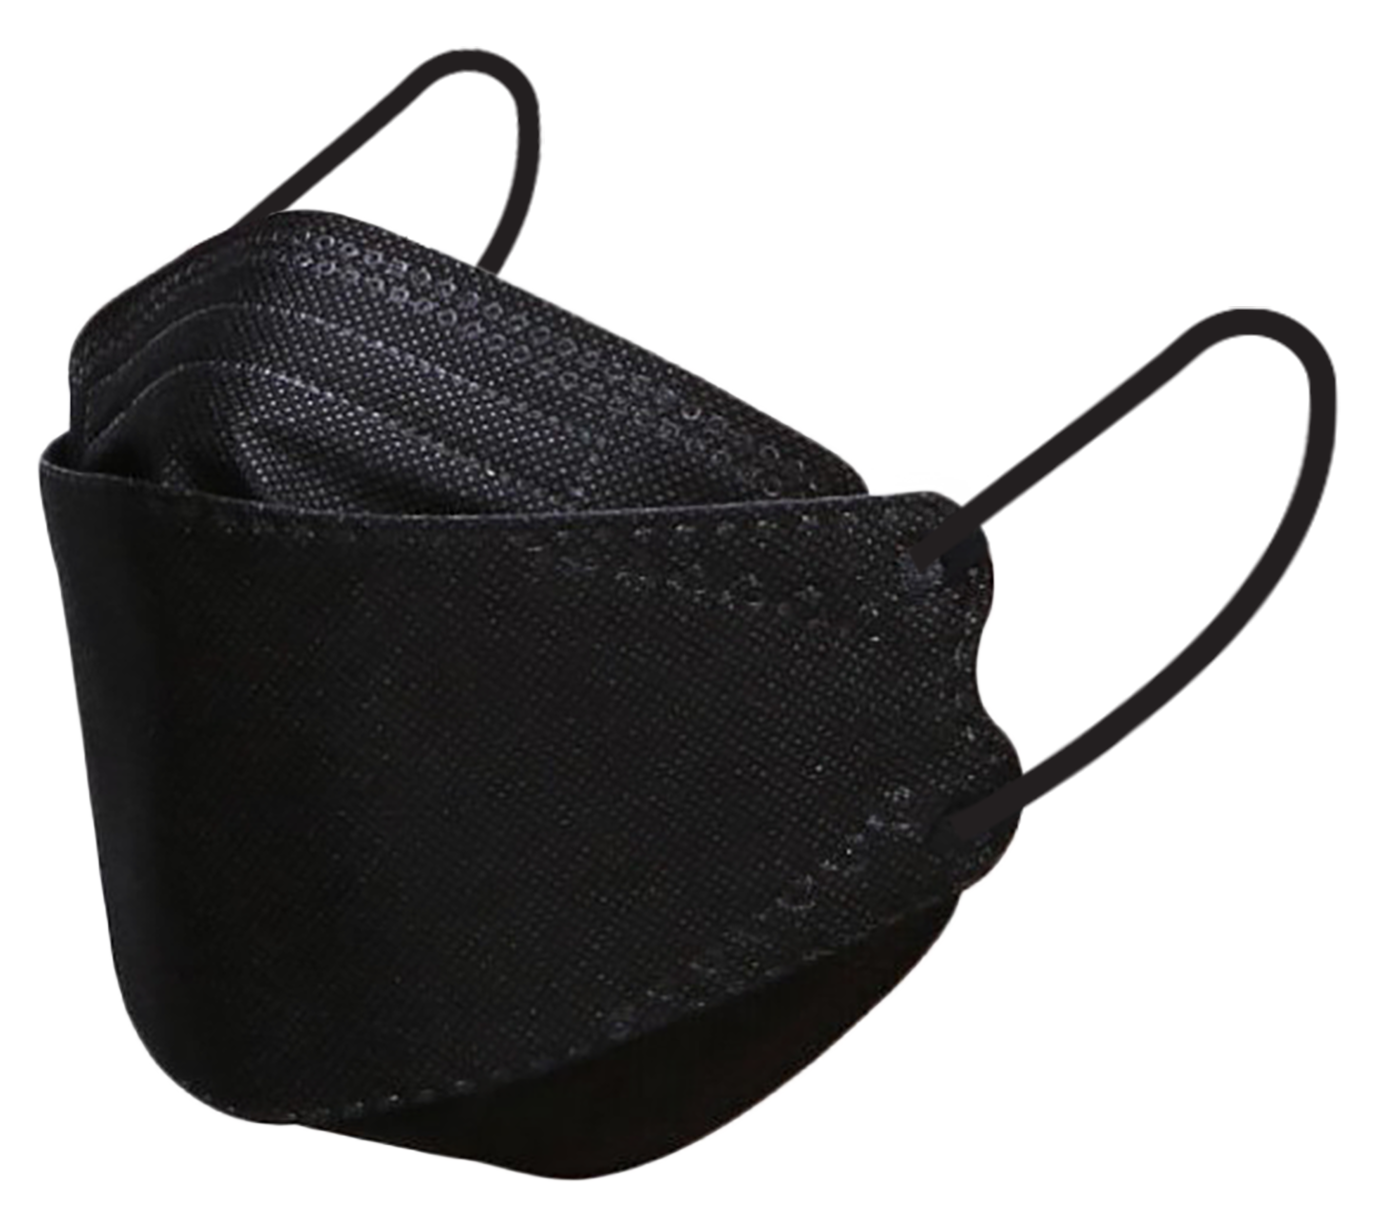 Black N95 Masks - Size Medium (Dent-X Canada FN-N95-510 Model - Box of 10 Disposable Masks)